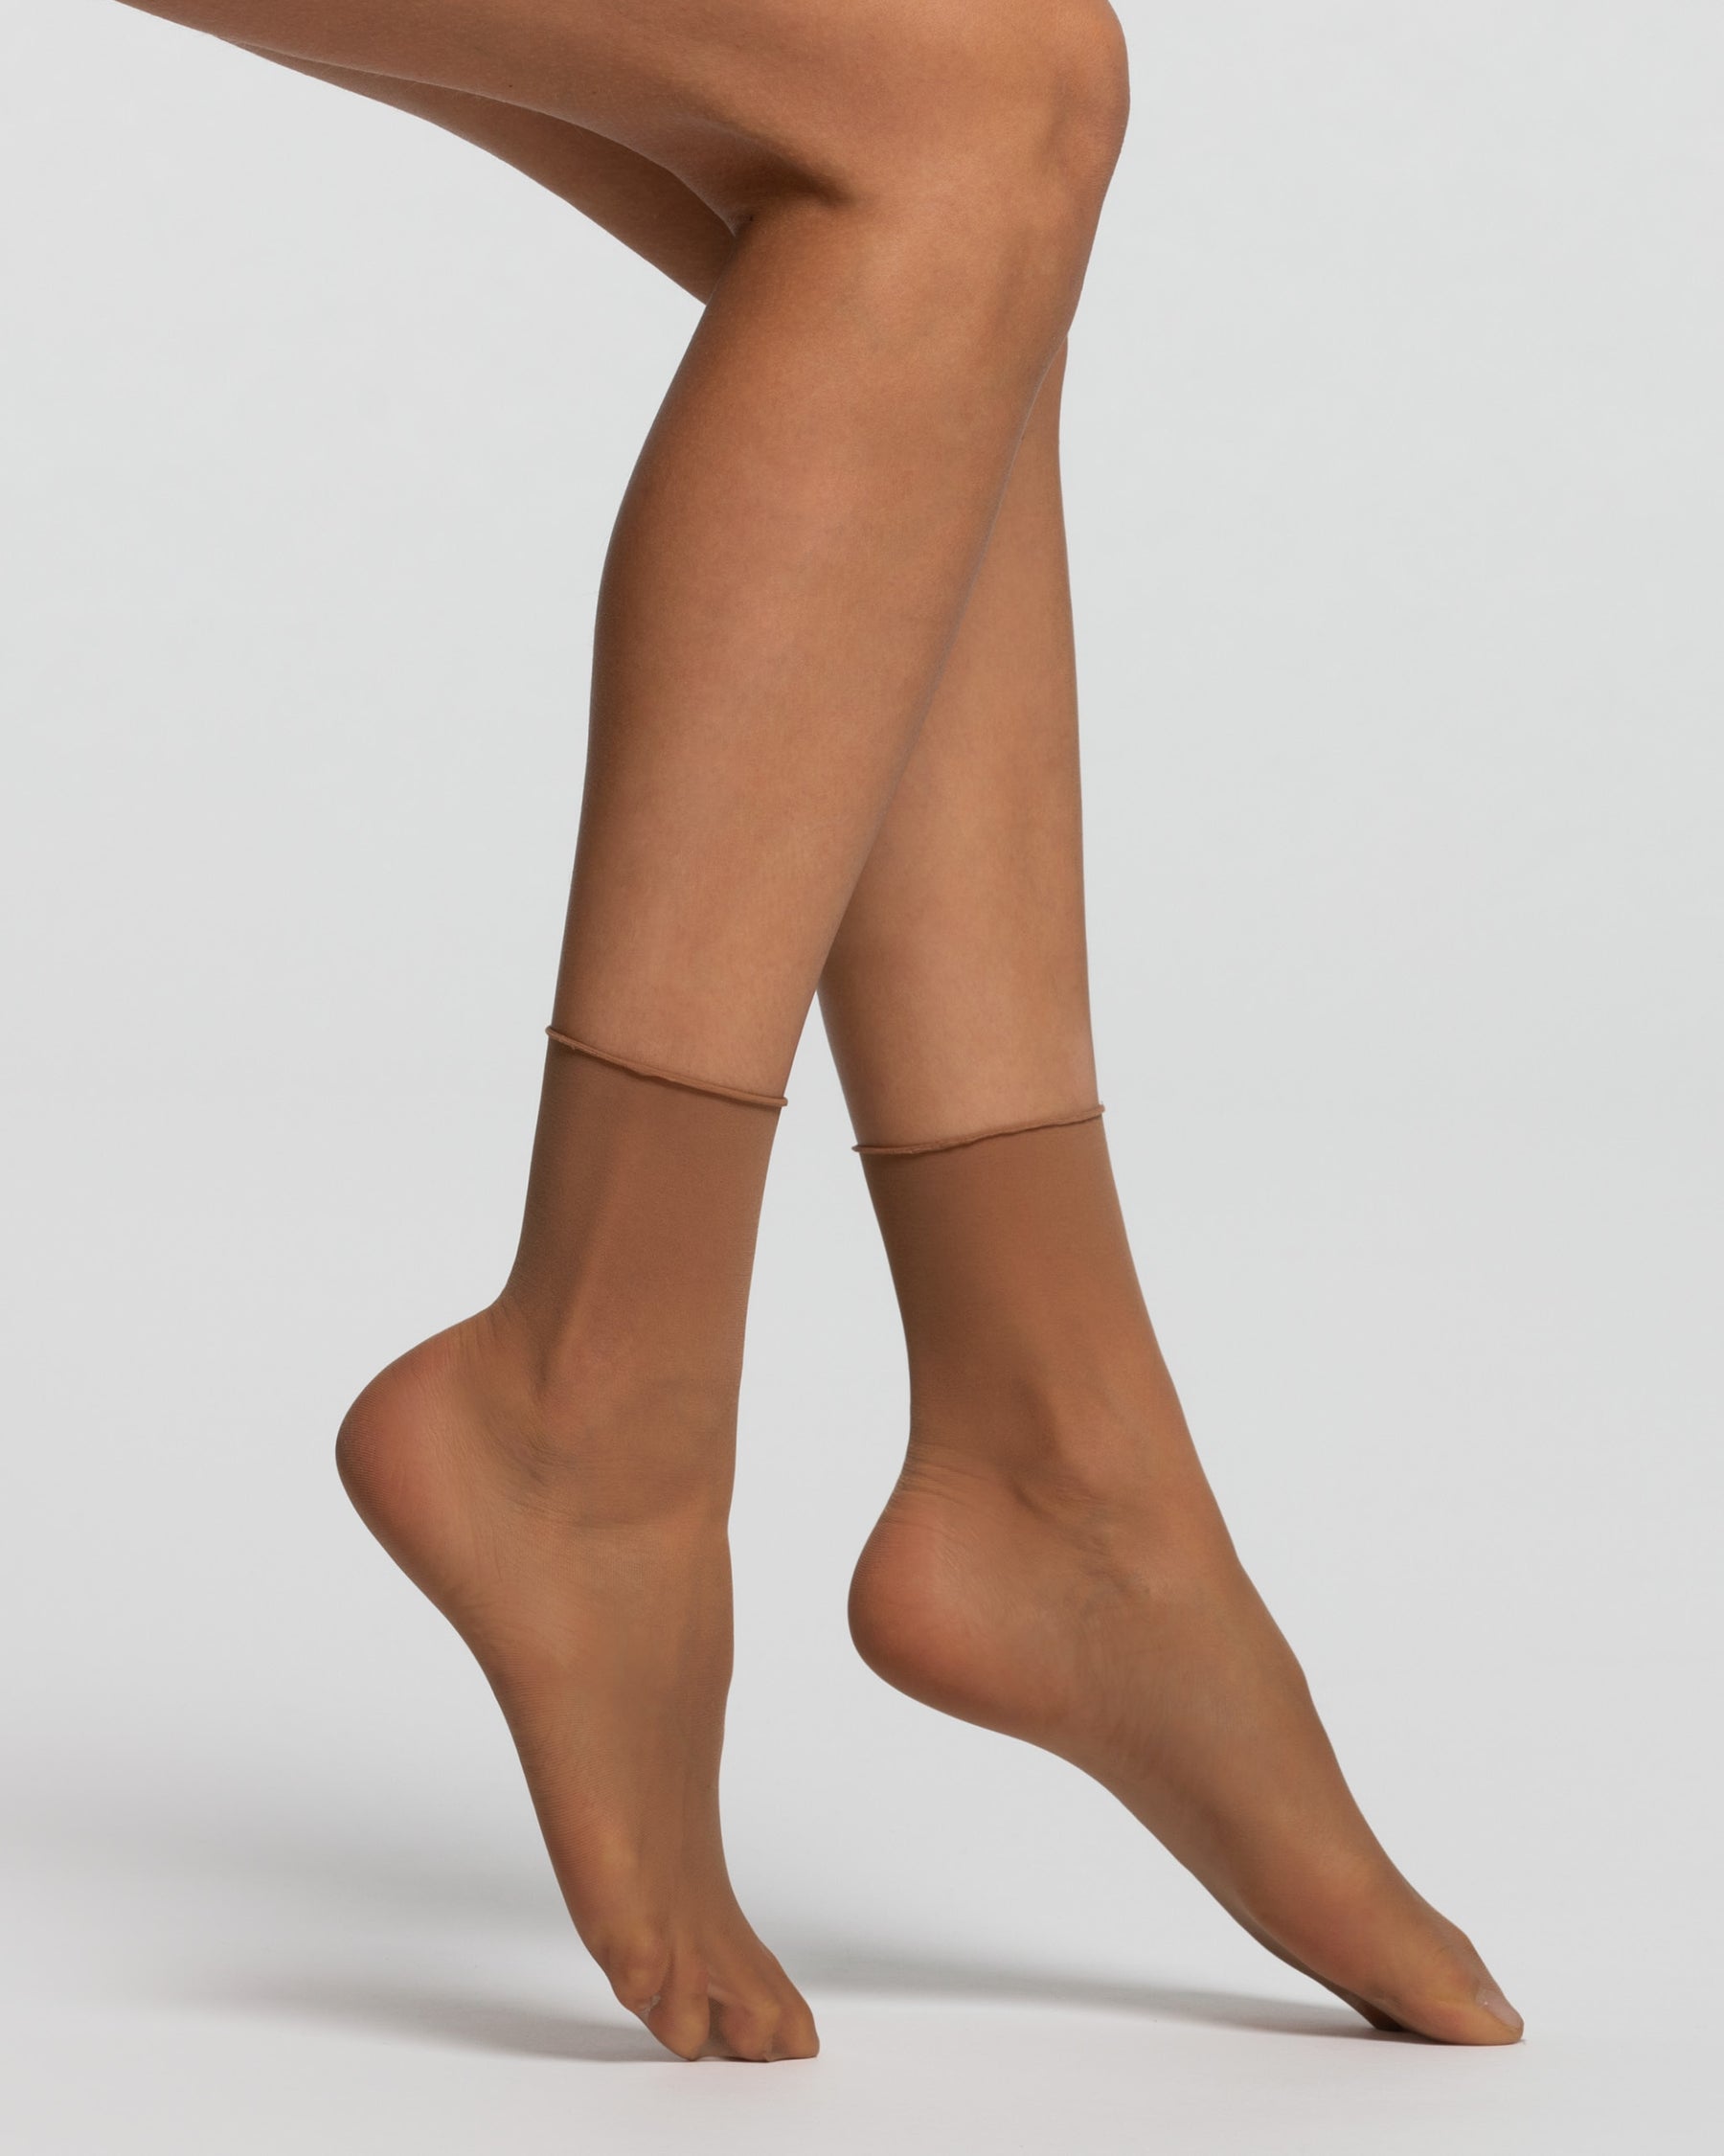 Women Nylon Socks - Ankle High Pop Socks Cotton Sole Nylon Pop